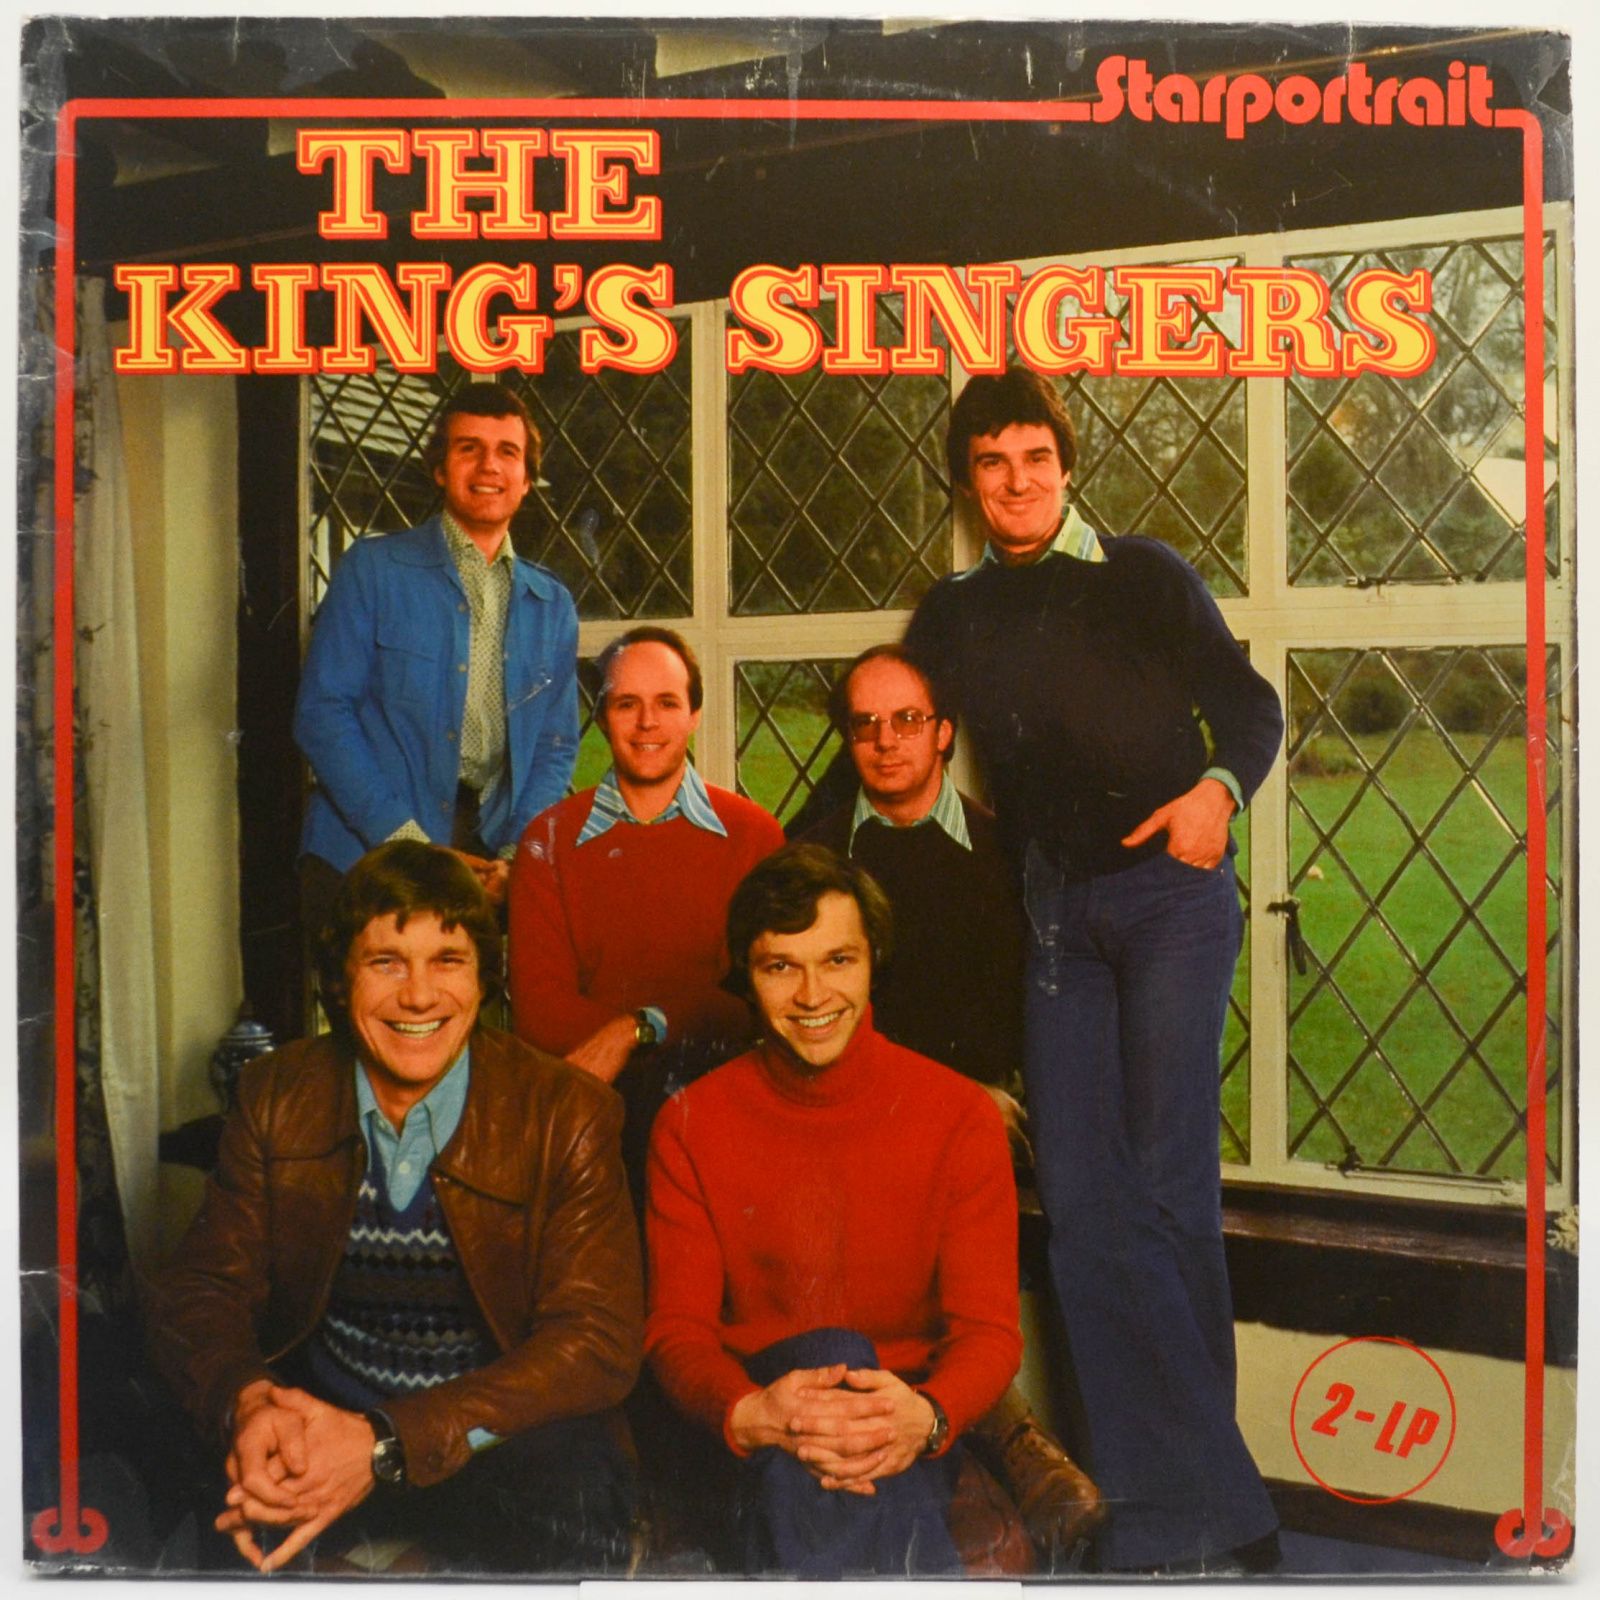 King's Singers — Starportrait 2LP, 1978